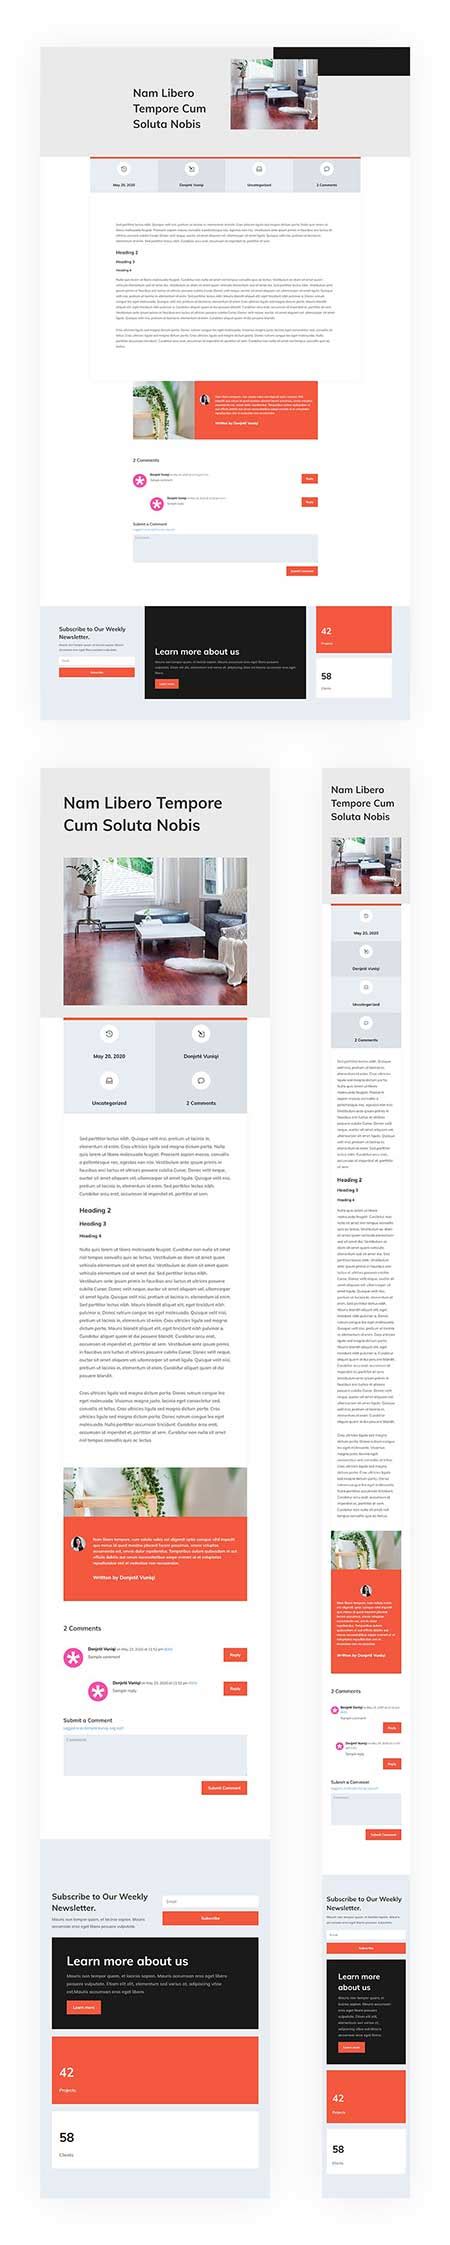 Free Divi Blog Post Template For Interior Designers